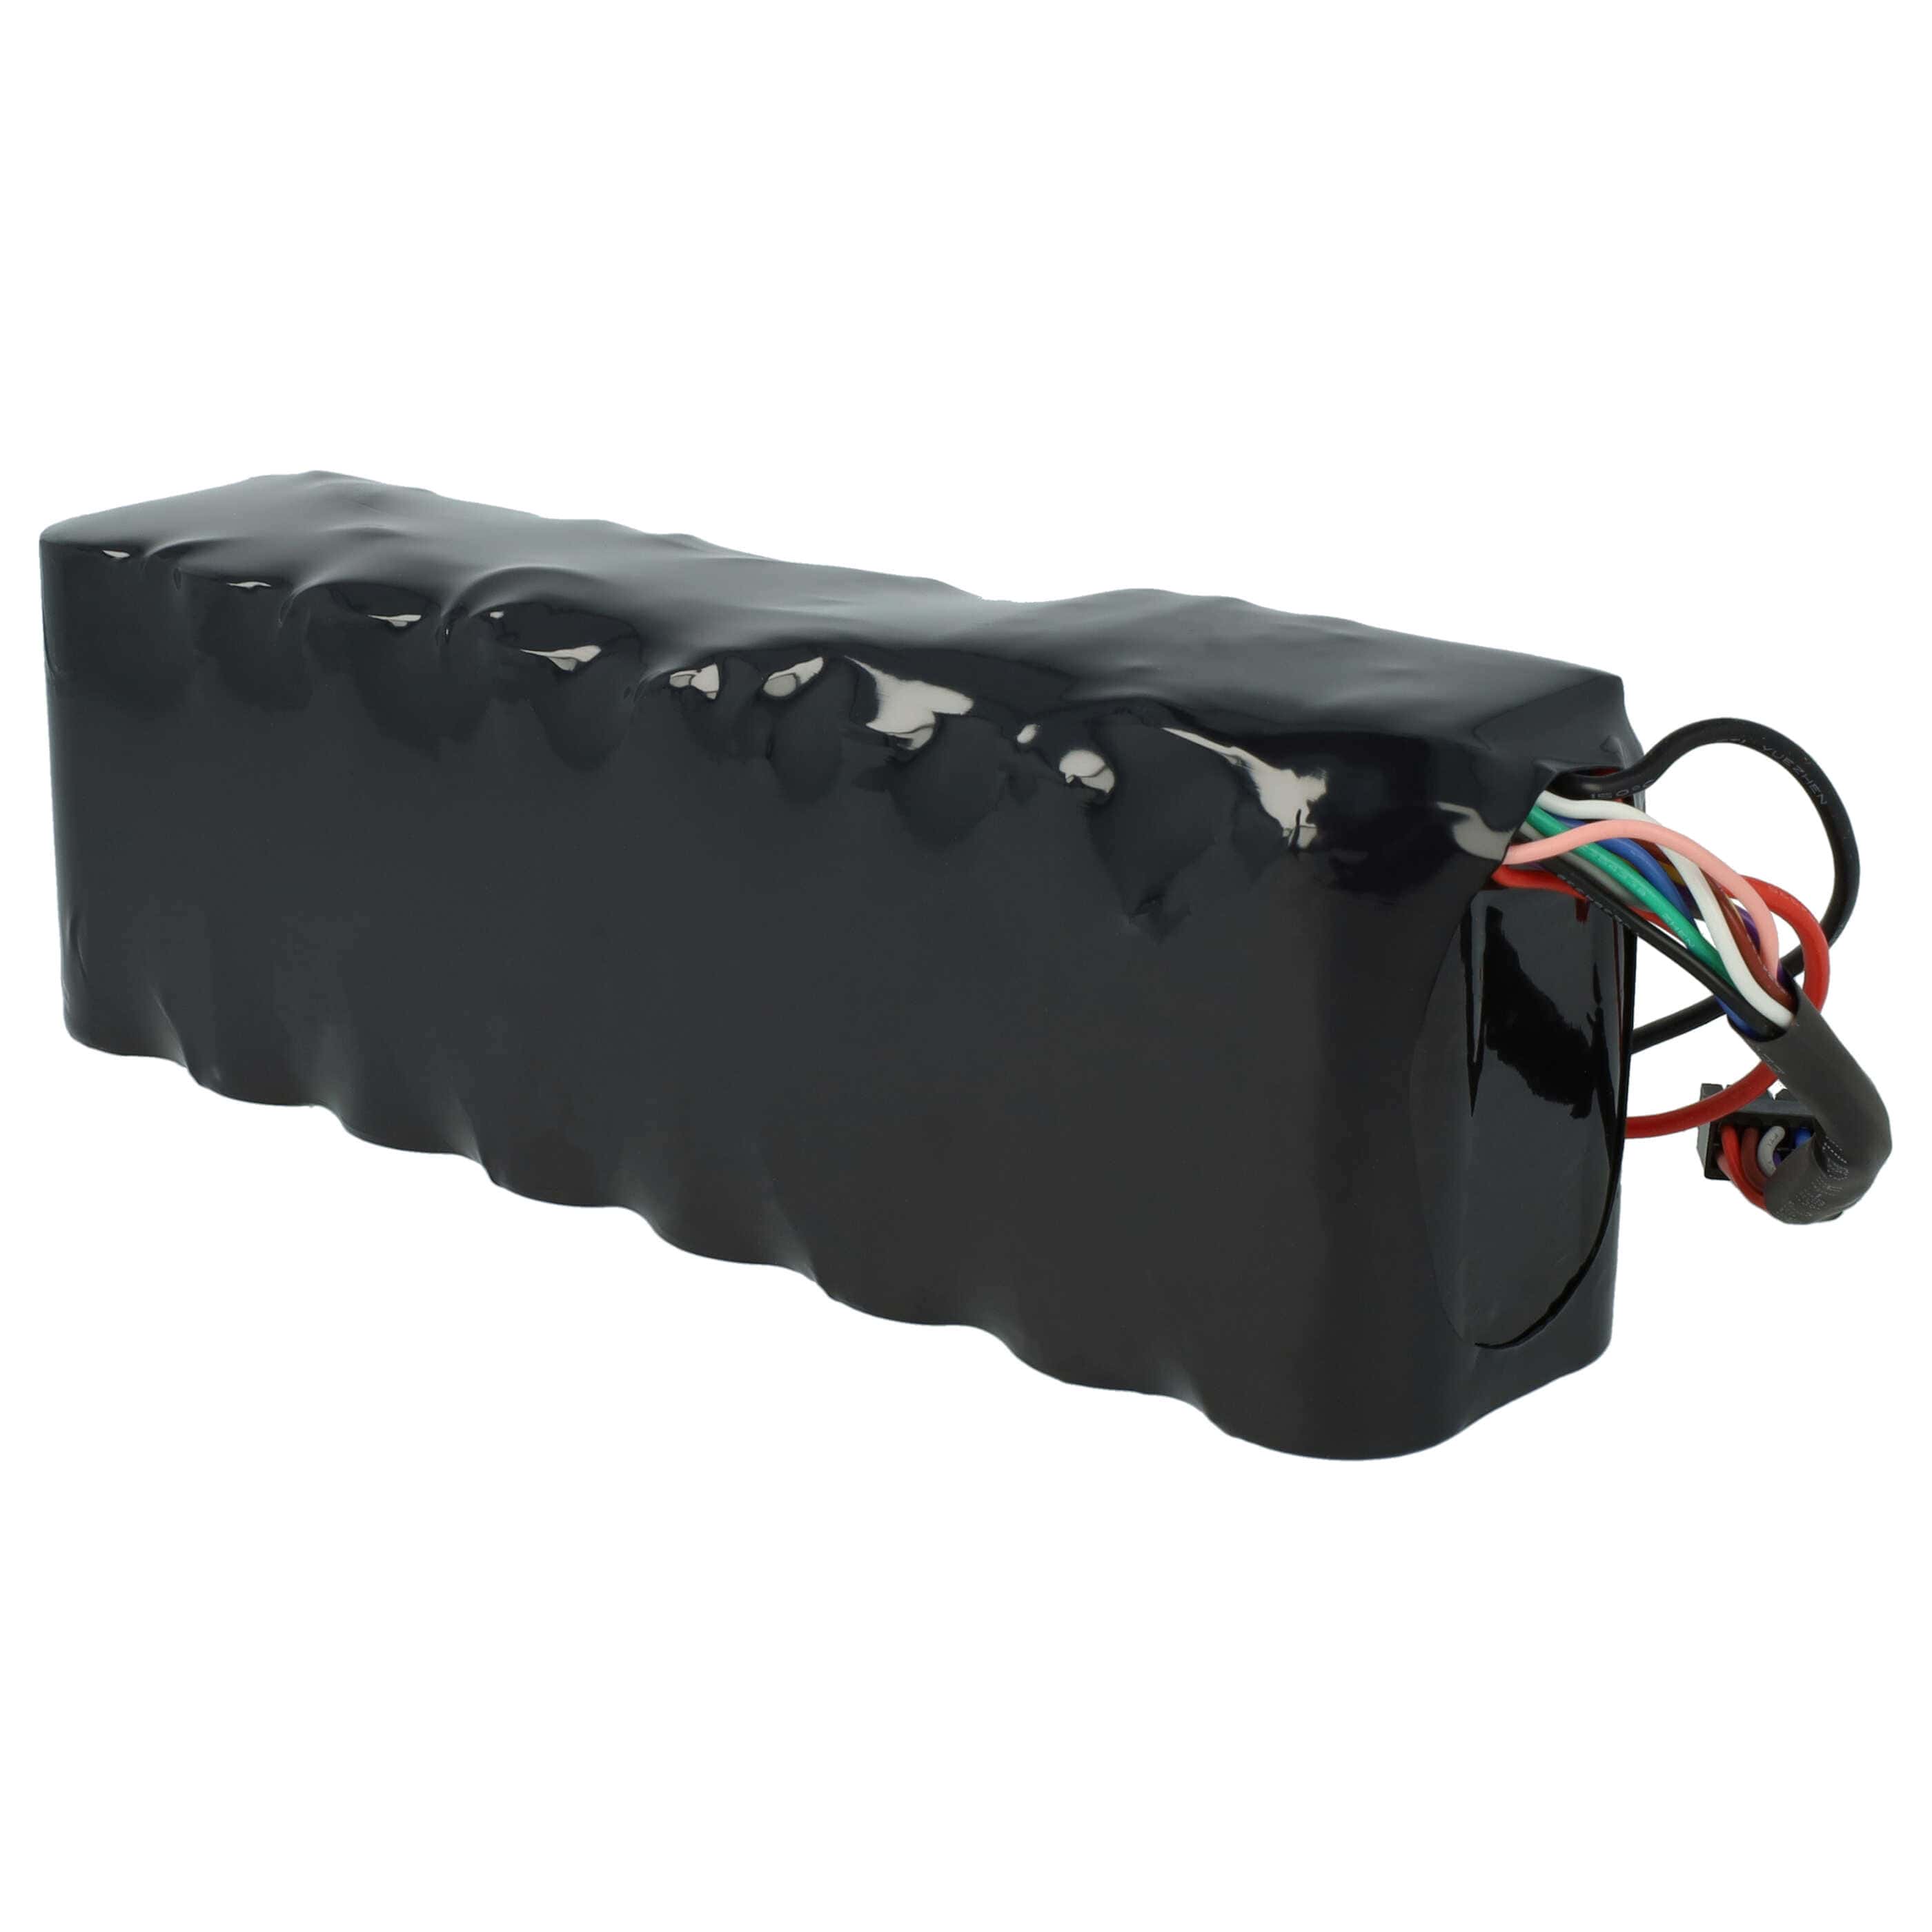 Lawnmower Battery Replacement for MRK6103A, MRK6105A, BAT6001B, BAT6000A, BAT6000C - 8000mAh 25.6V LiFePO4